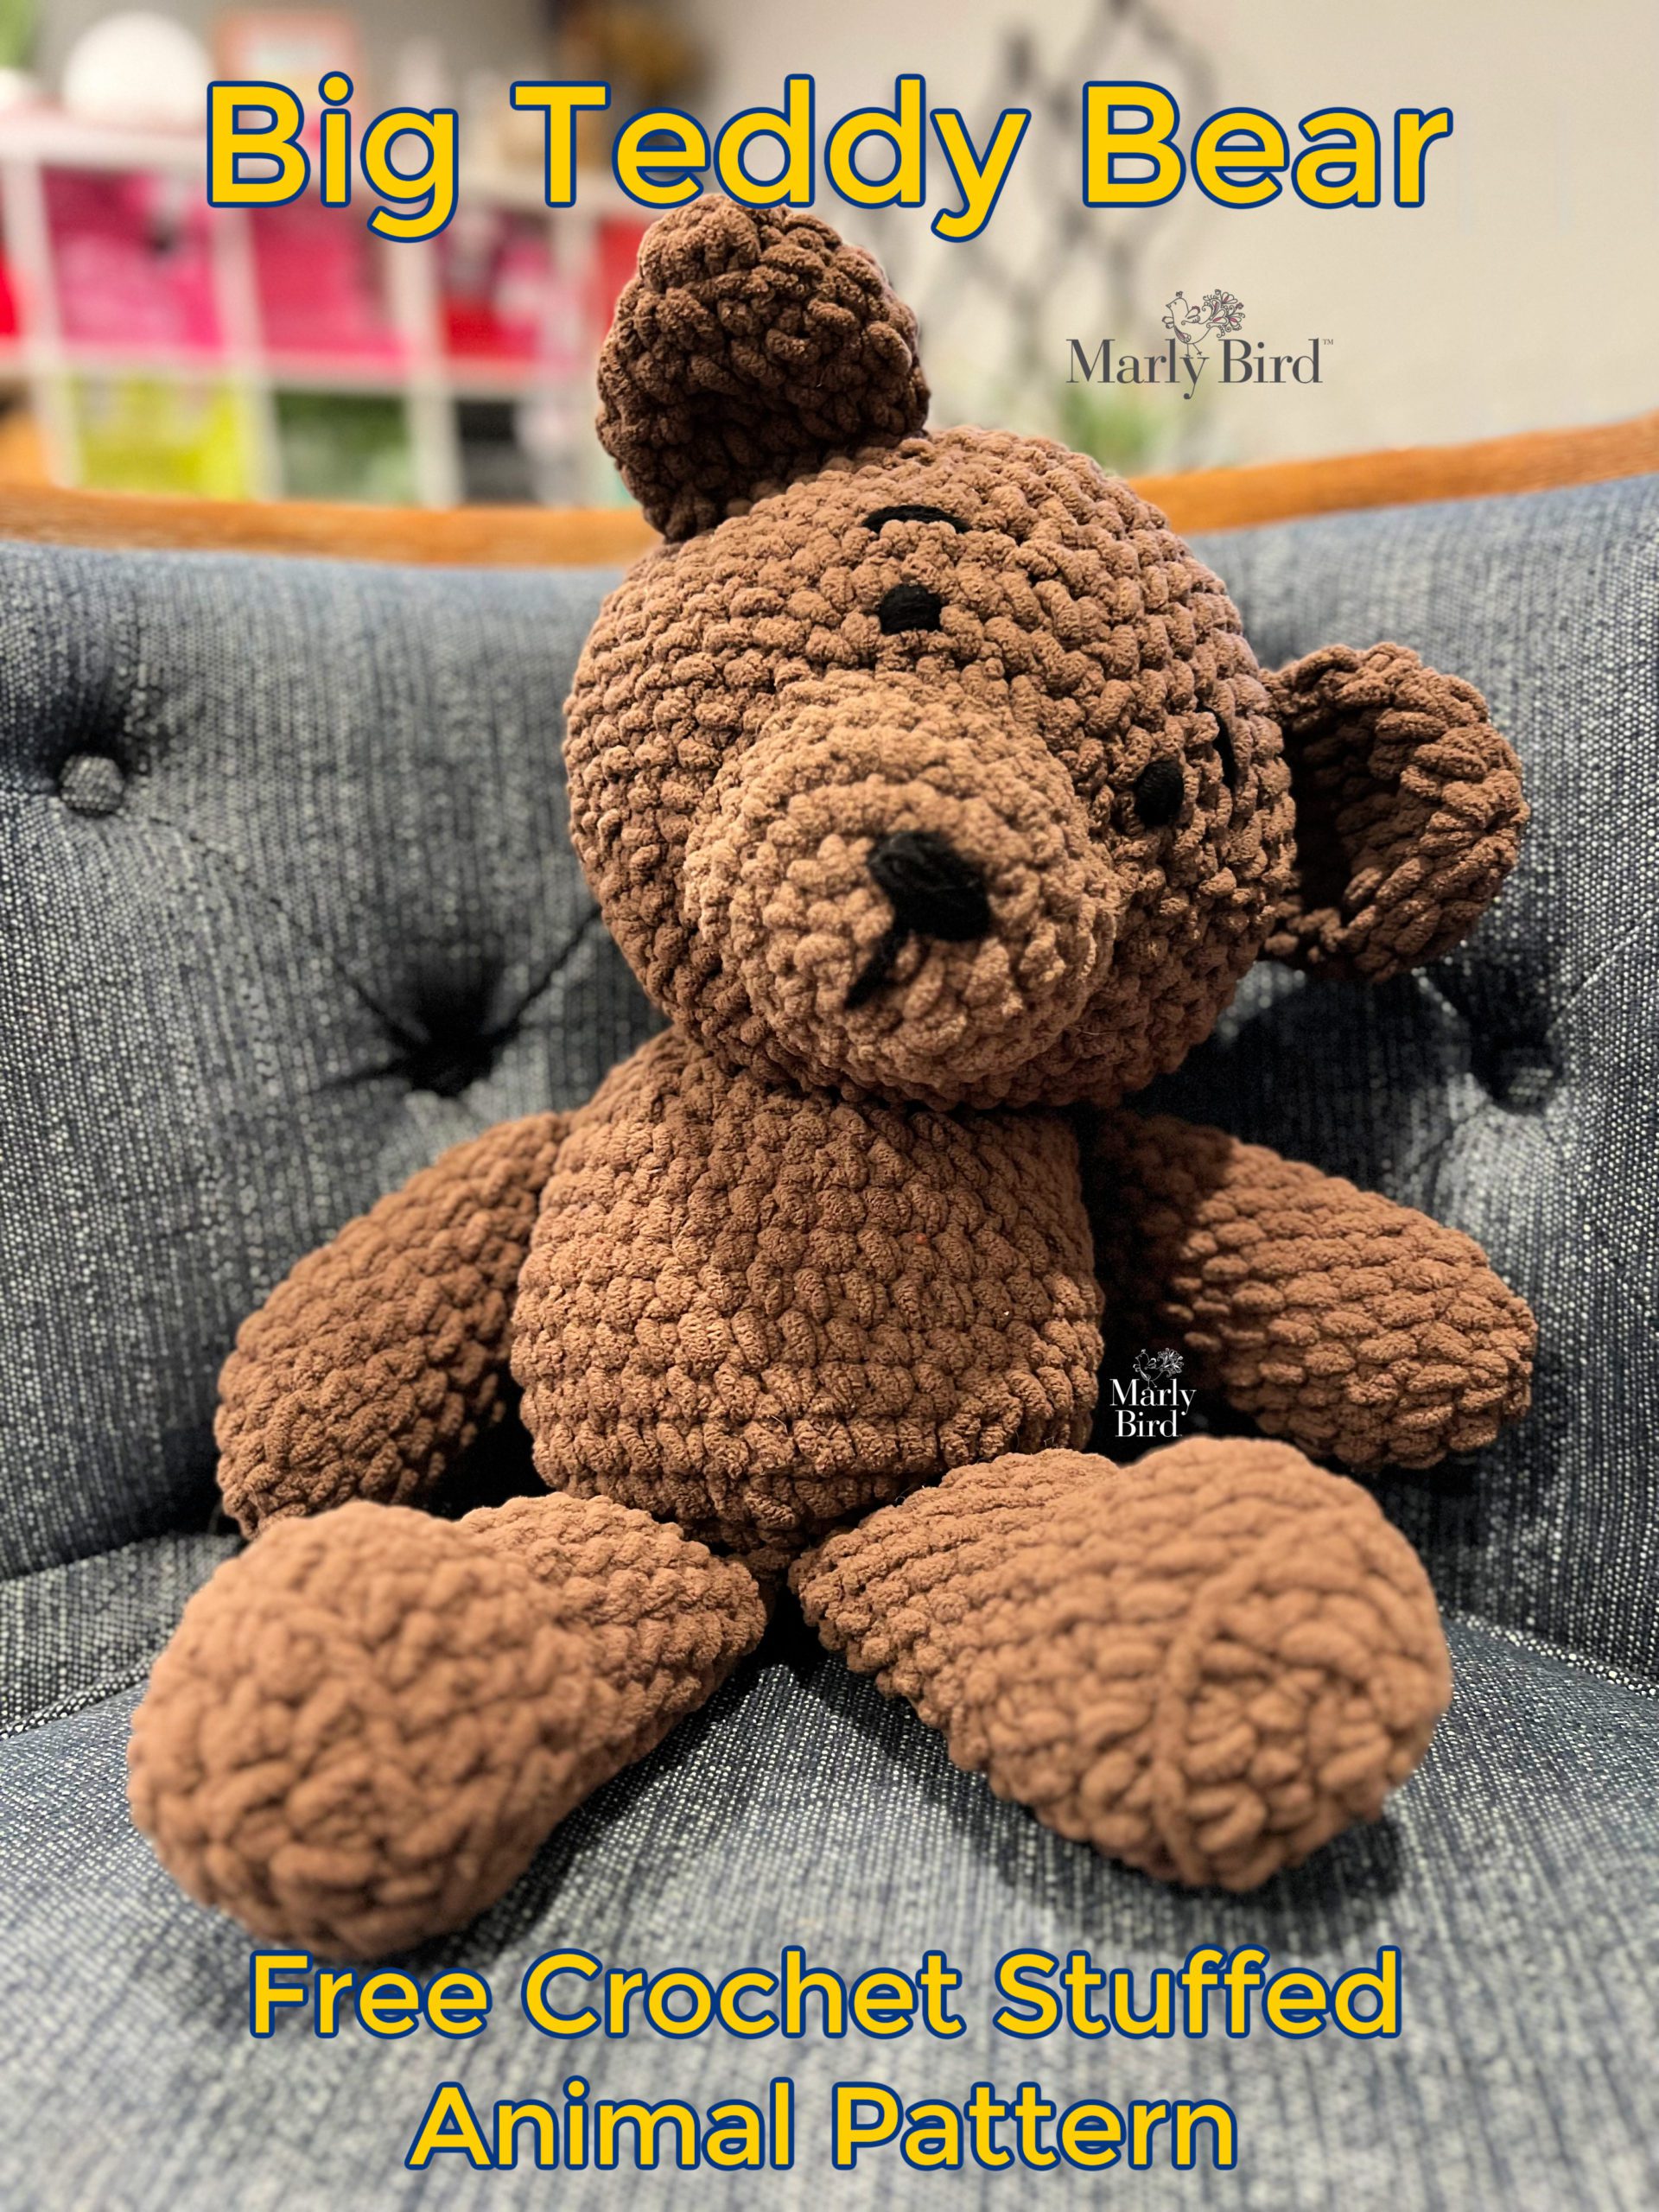 Big Teddy Bear || Free Crochet Stuffed Animal Pattern - Marly Bird